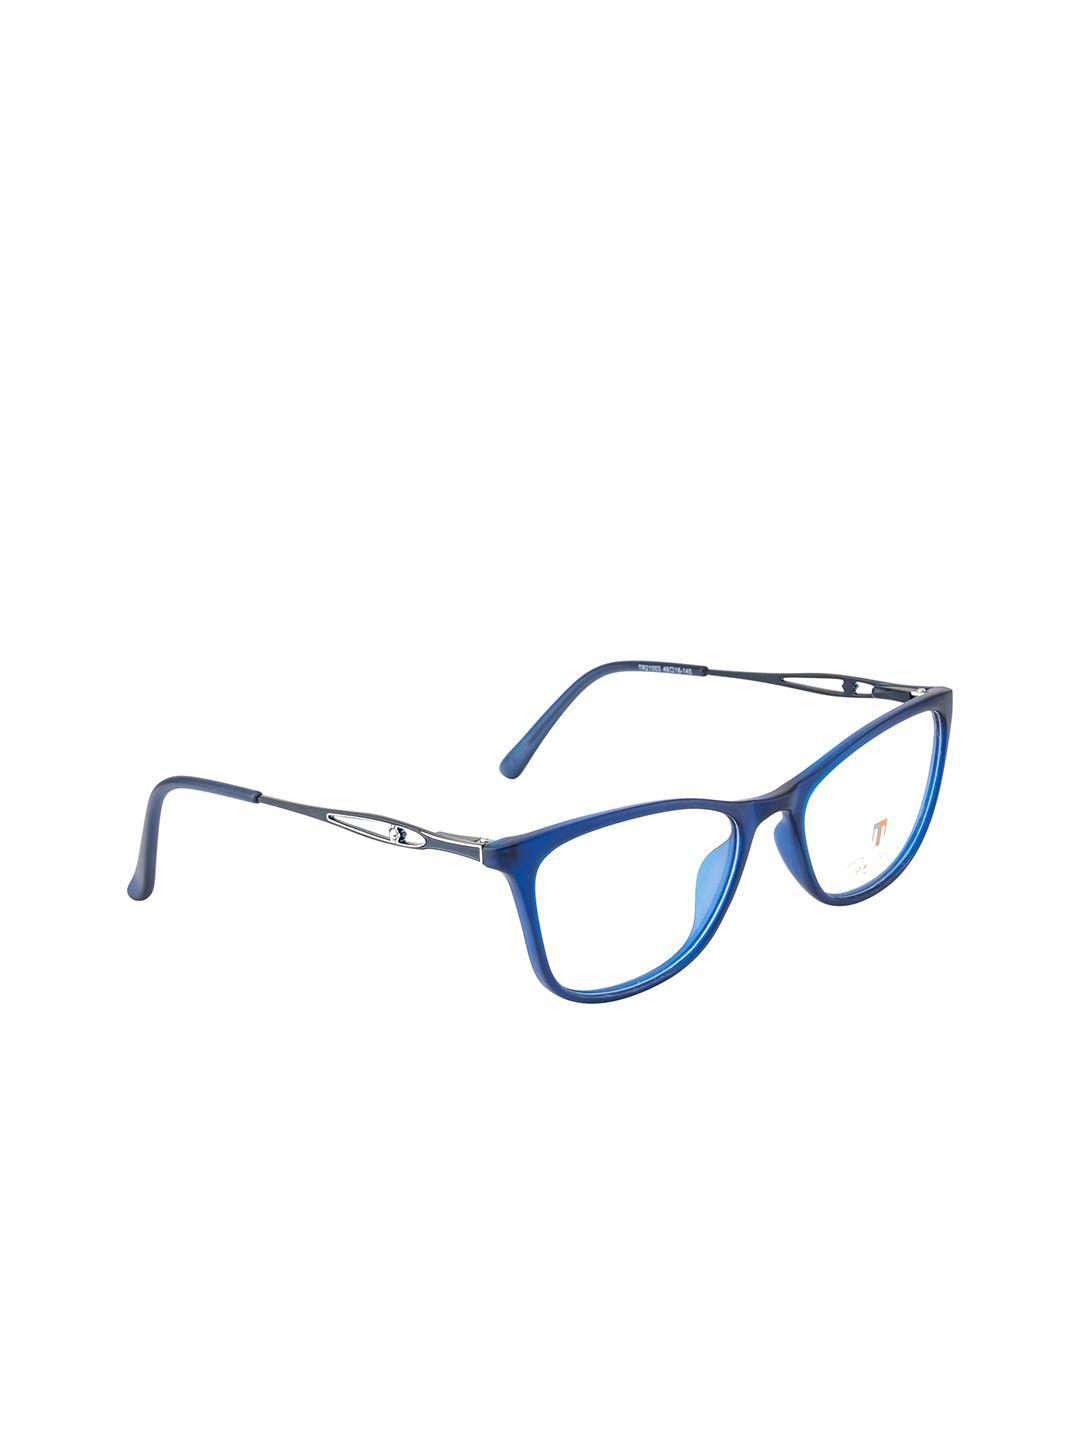 ted smith women blue full rim cateye frames ts-21003